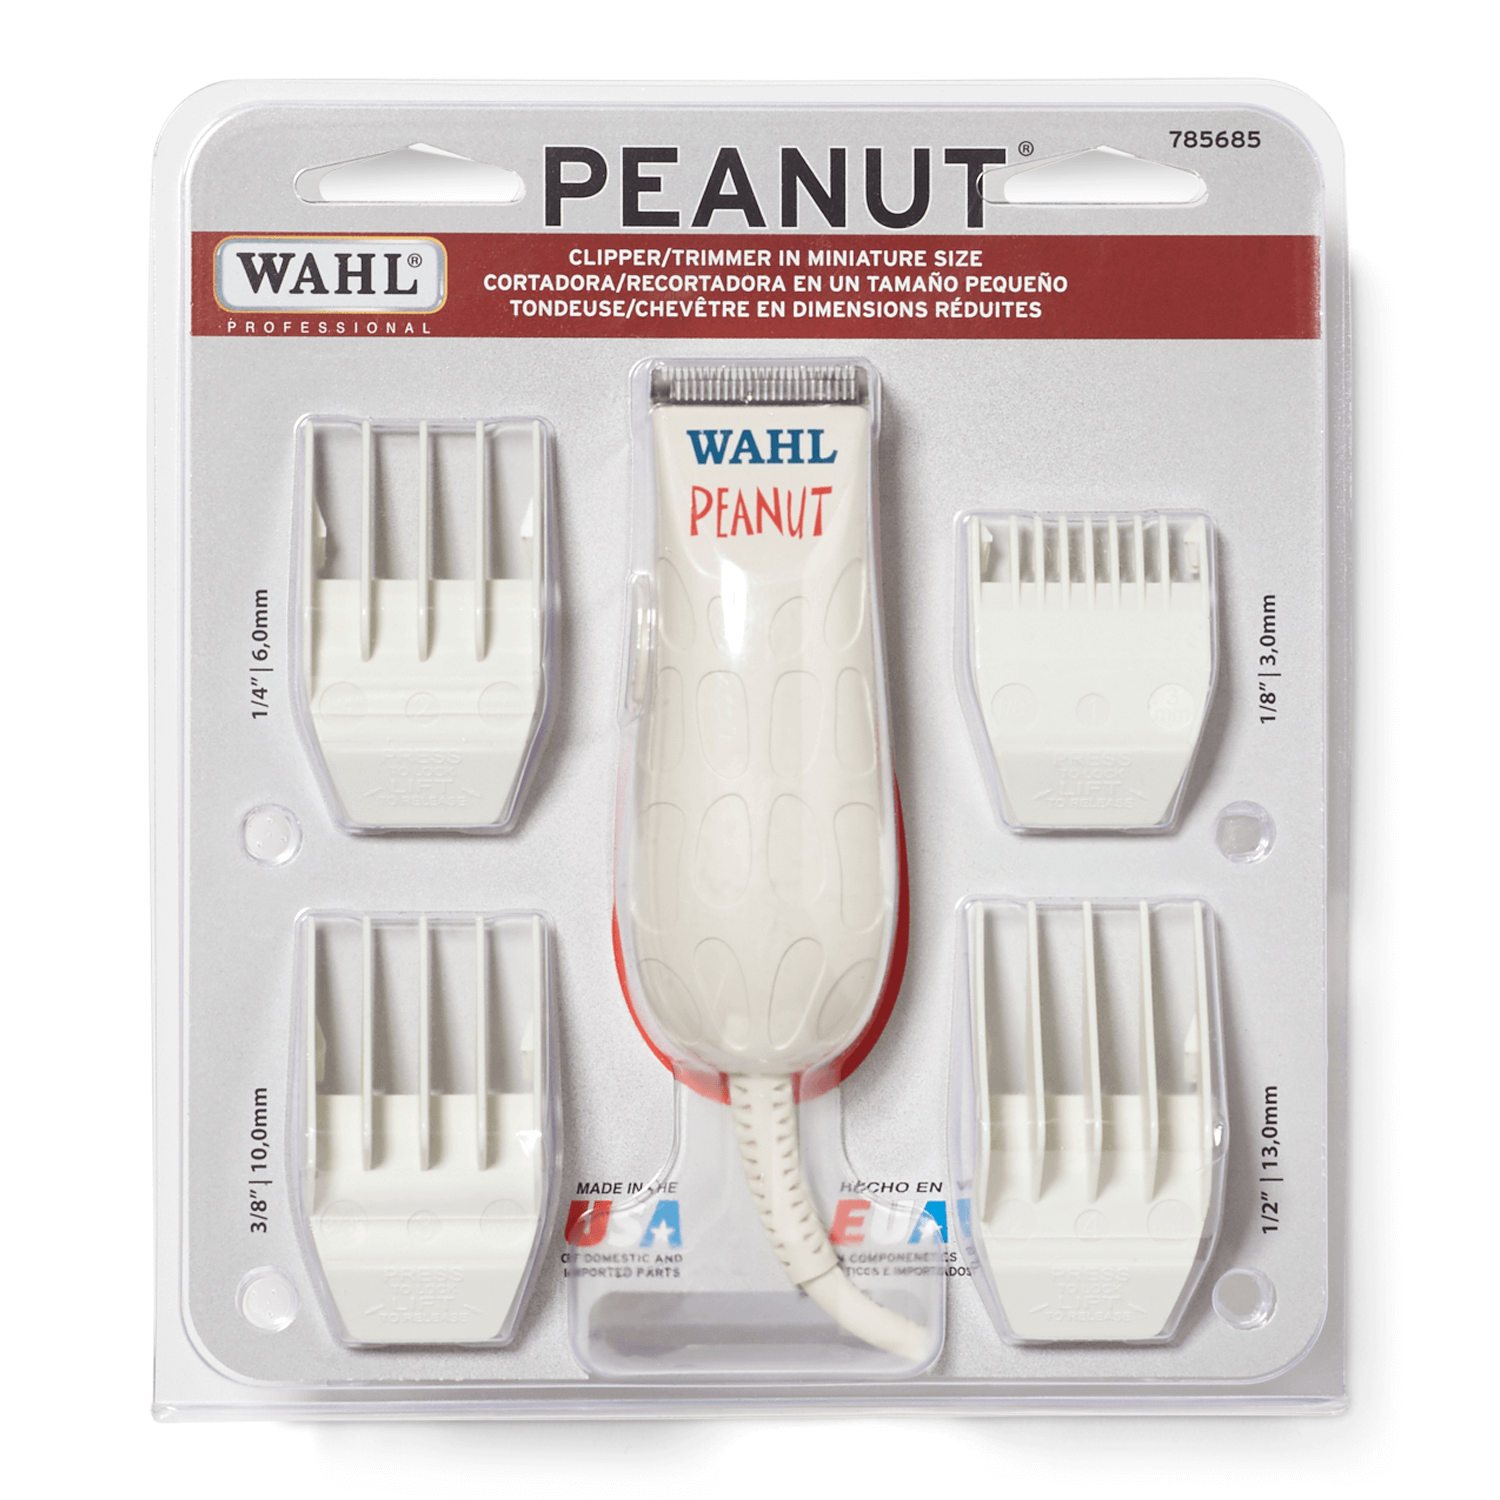 peanut hair trimmer cordless